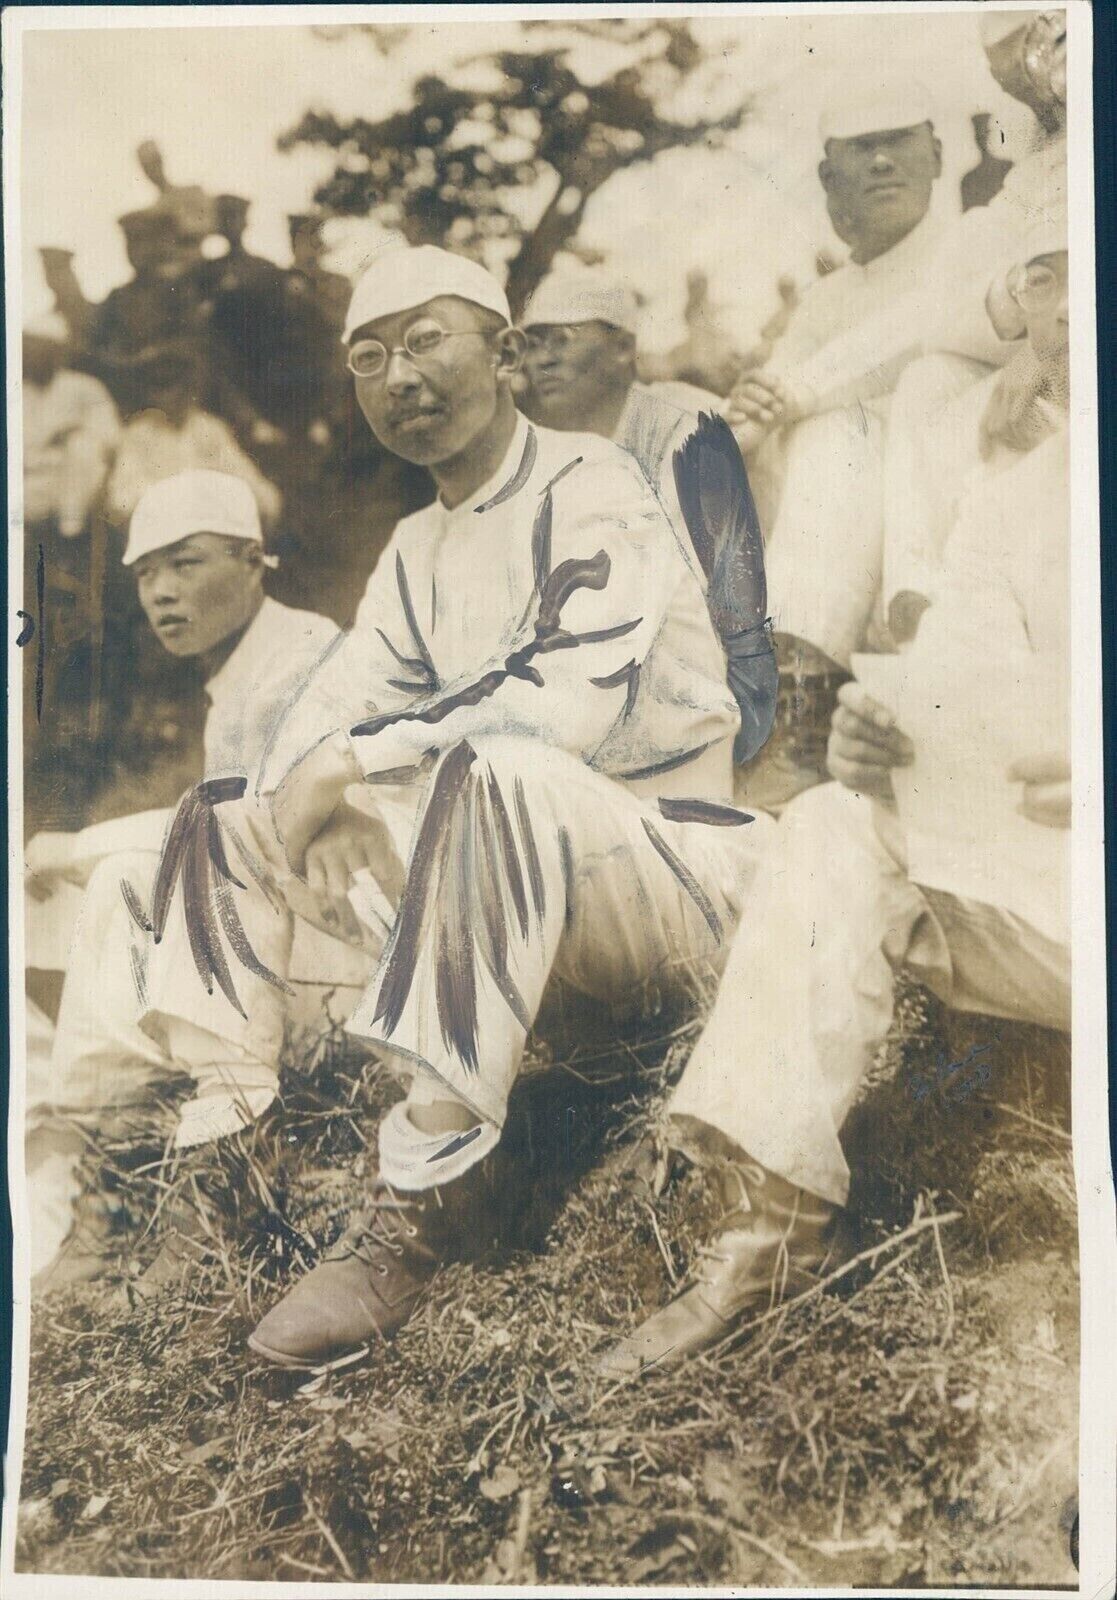 1921 Prince Atsu Emperor Japan Athletic Sports Military Cadet Royalty 5x7 Photo